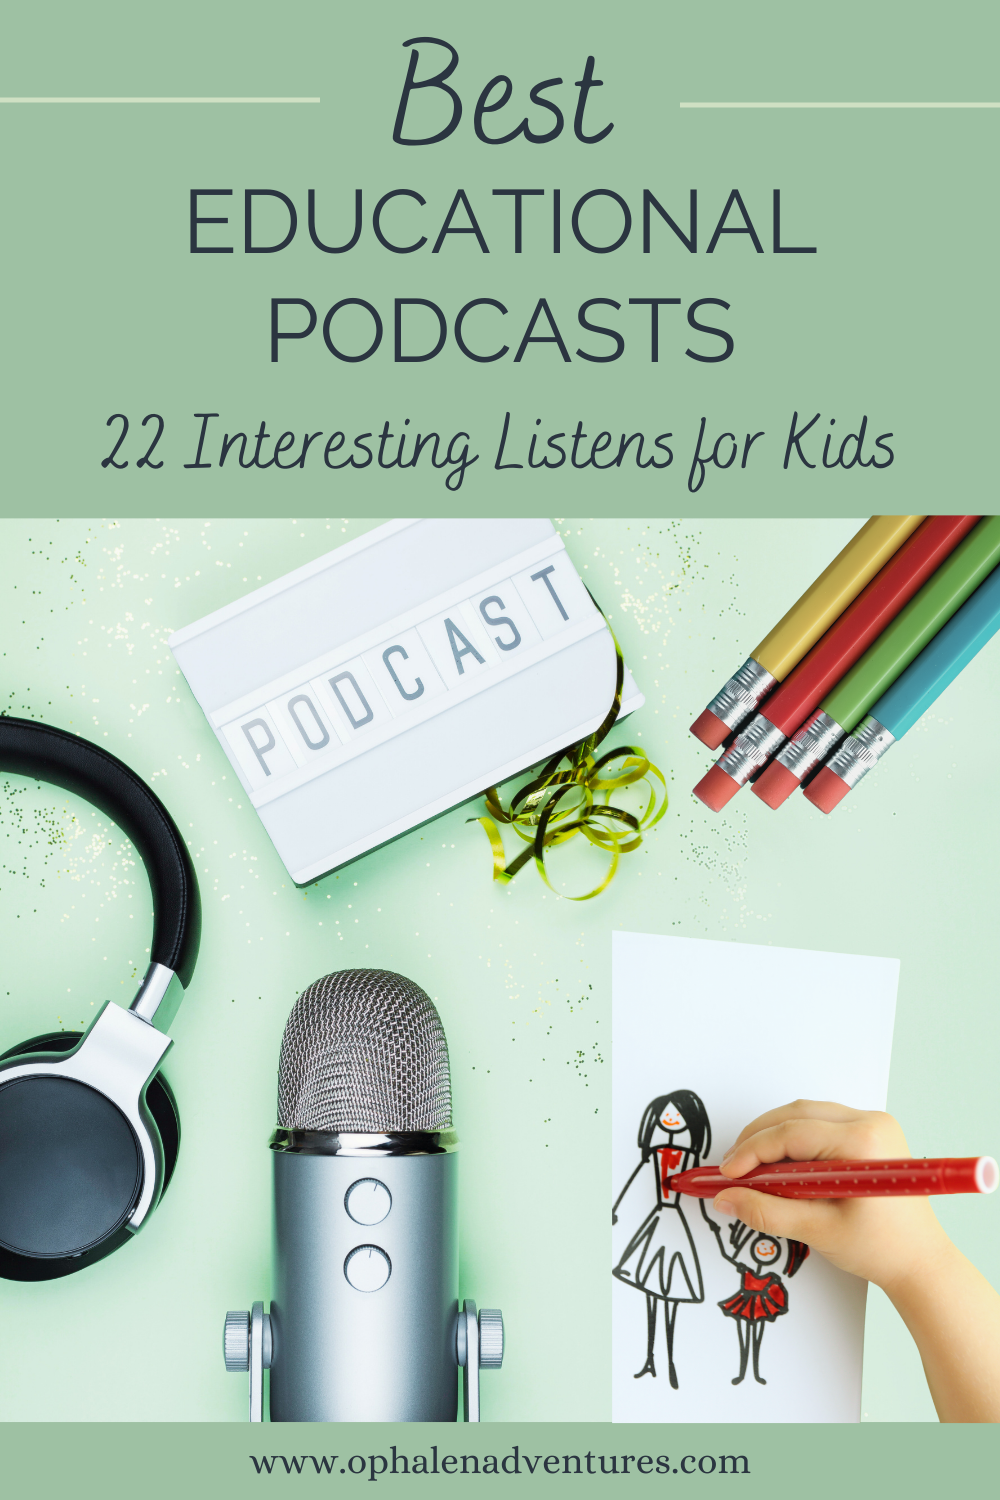 Best Educational Podcasts: 22 Interesting Listens for Kids